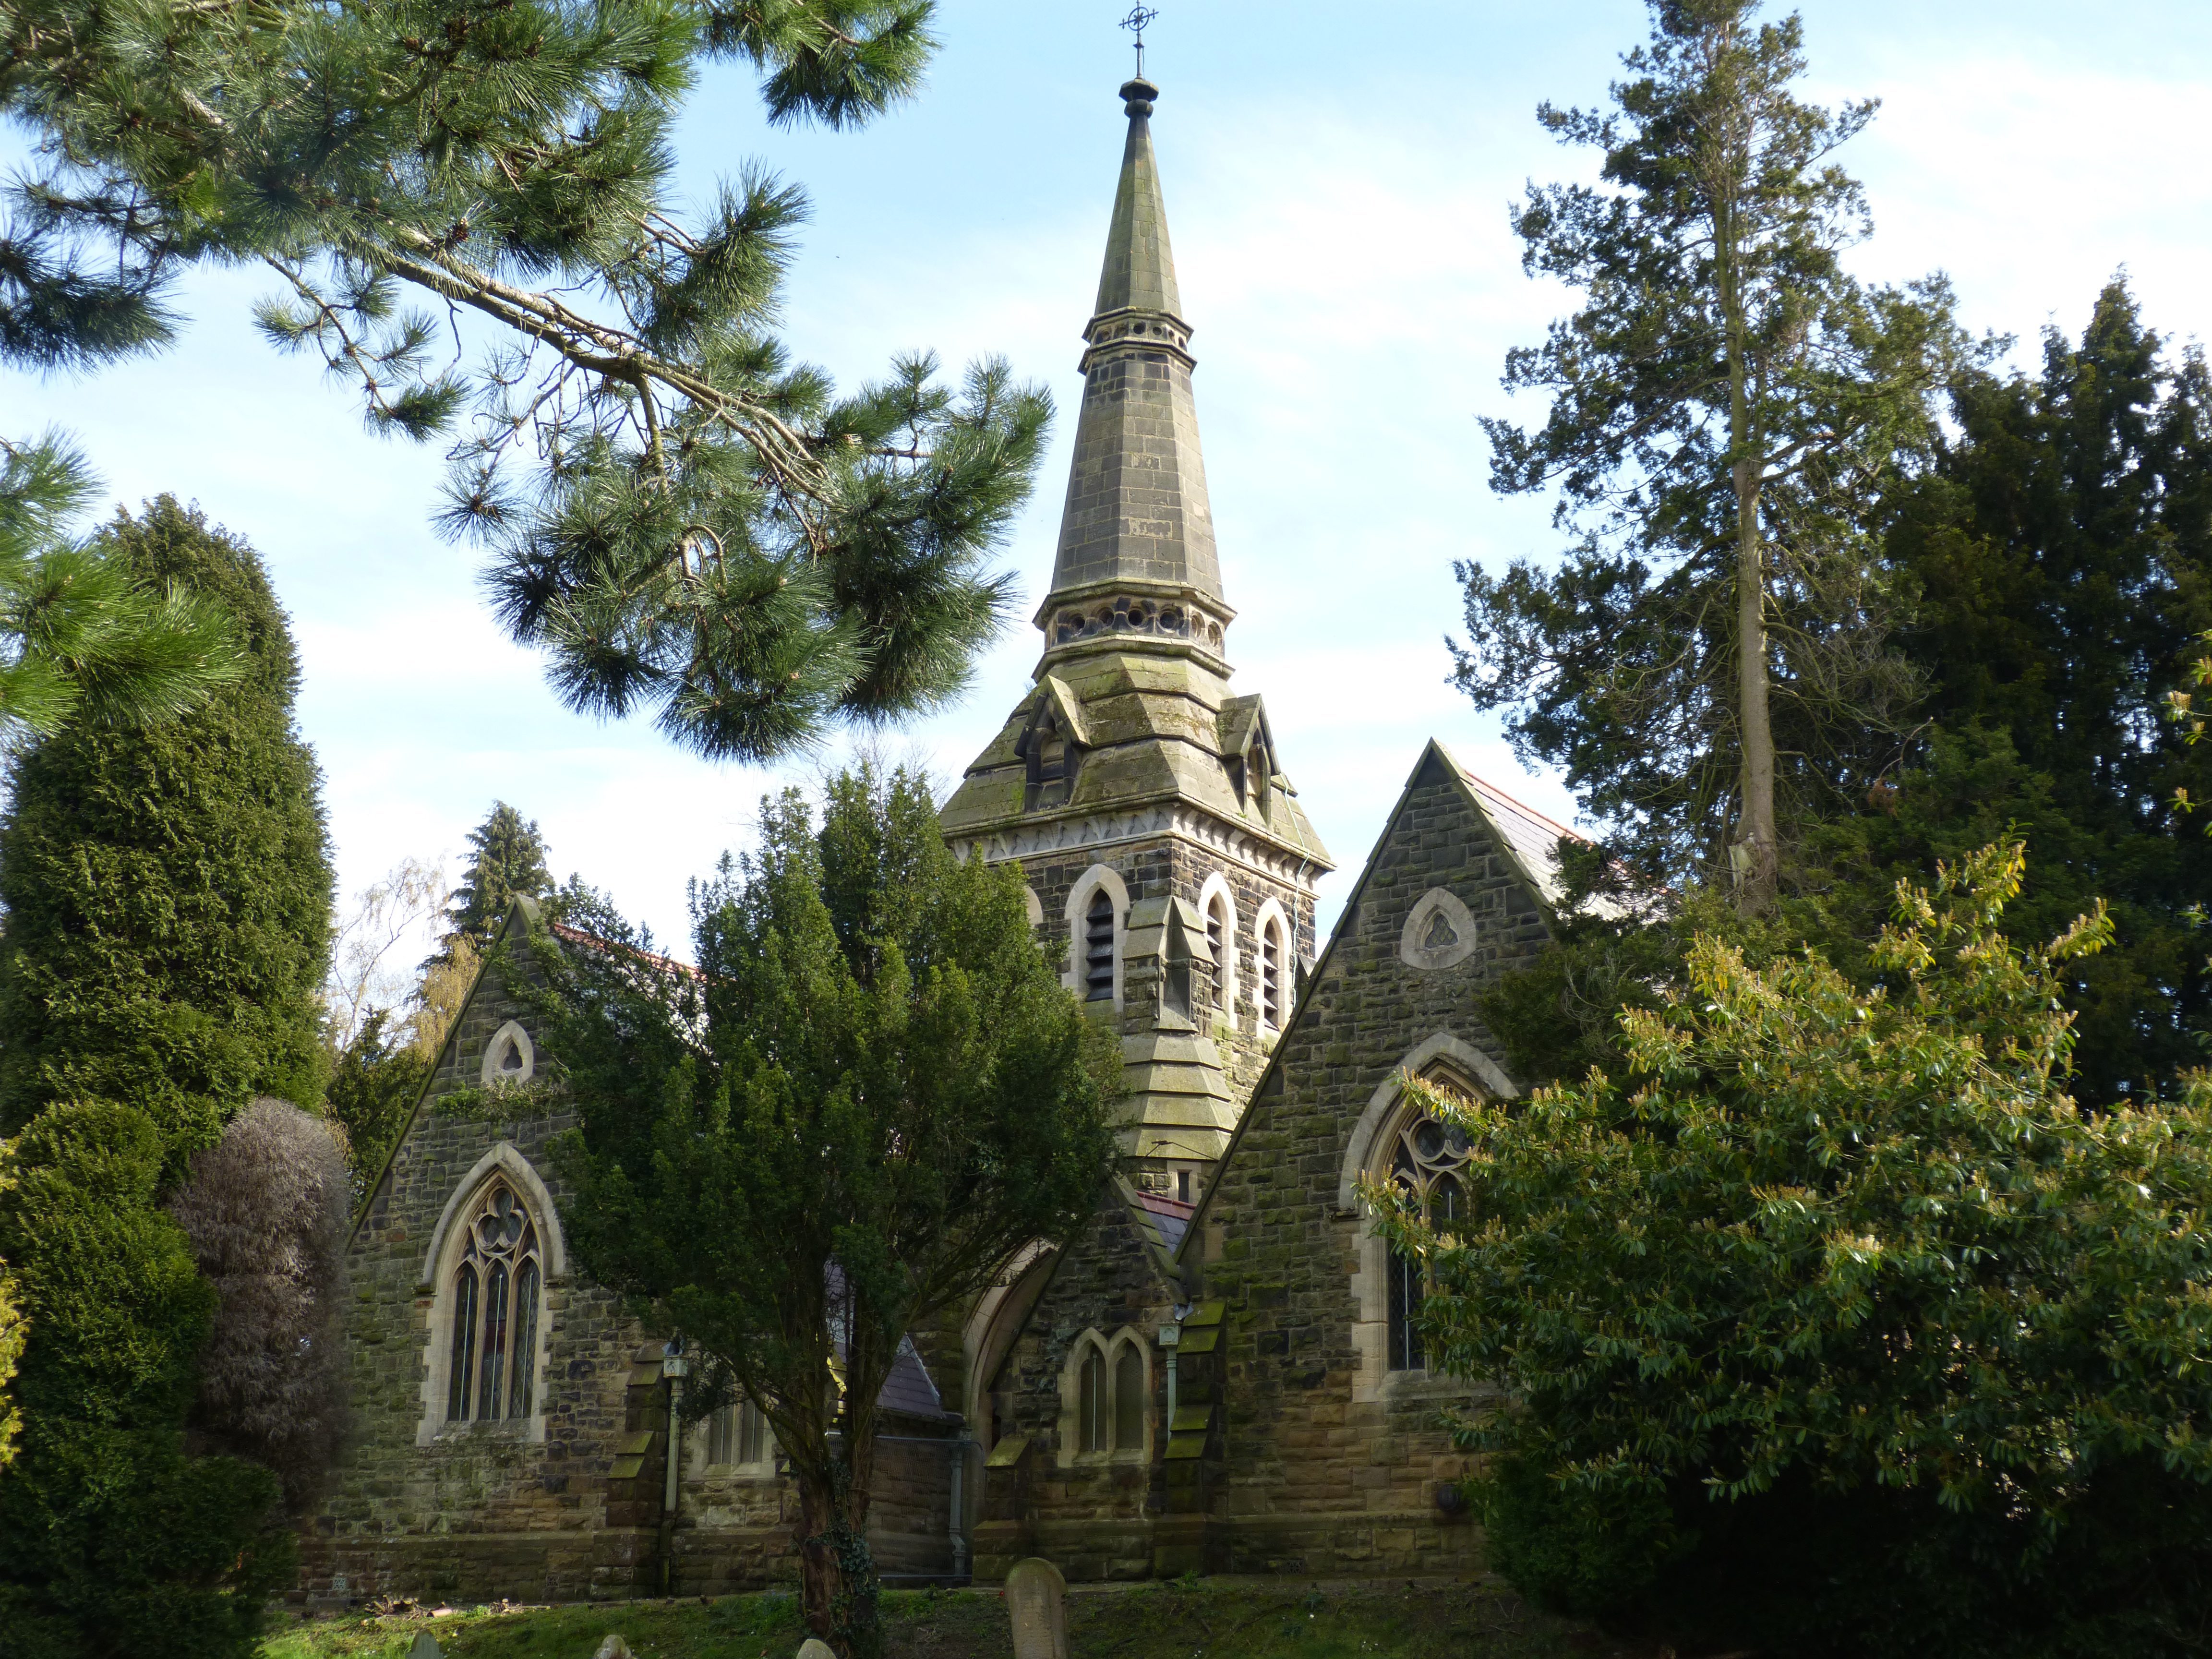 Award for Wrexham Cemetery Refurbishment